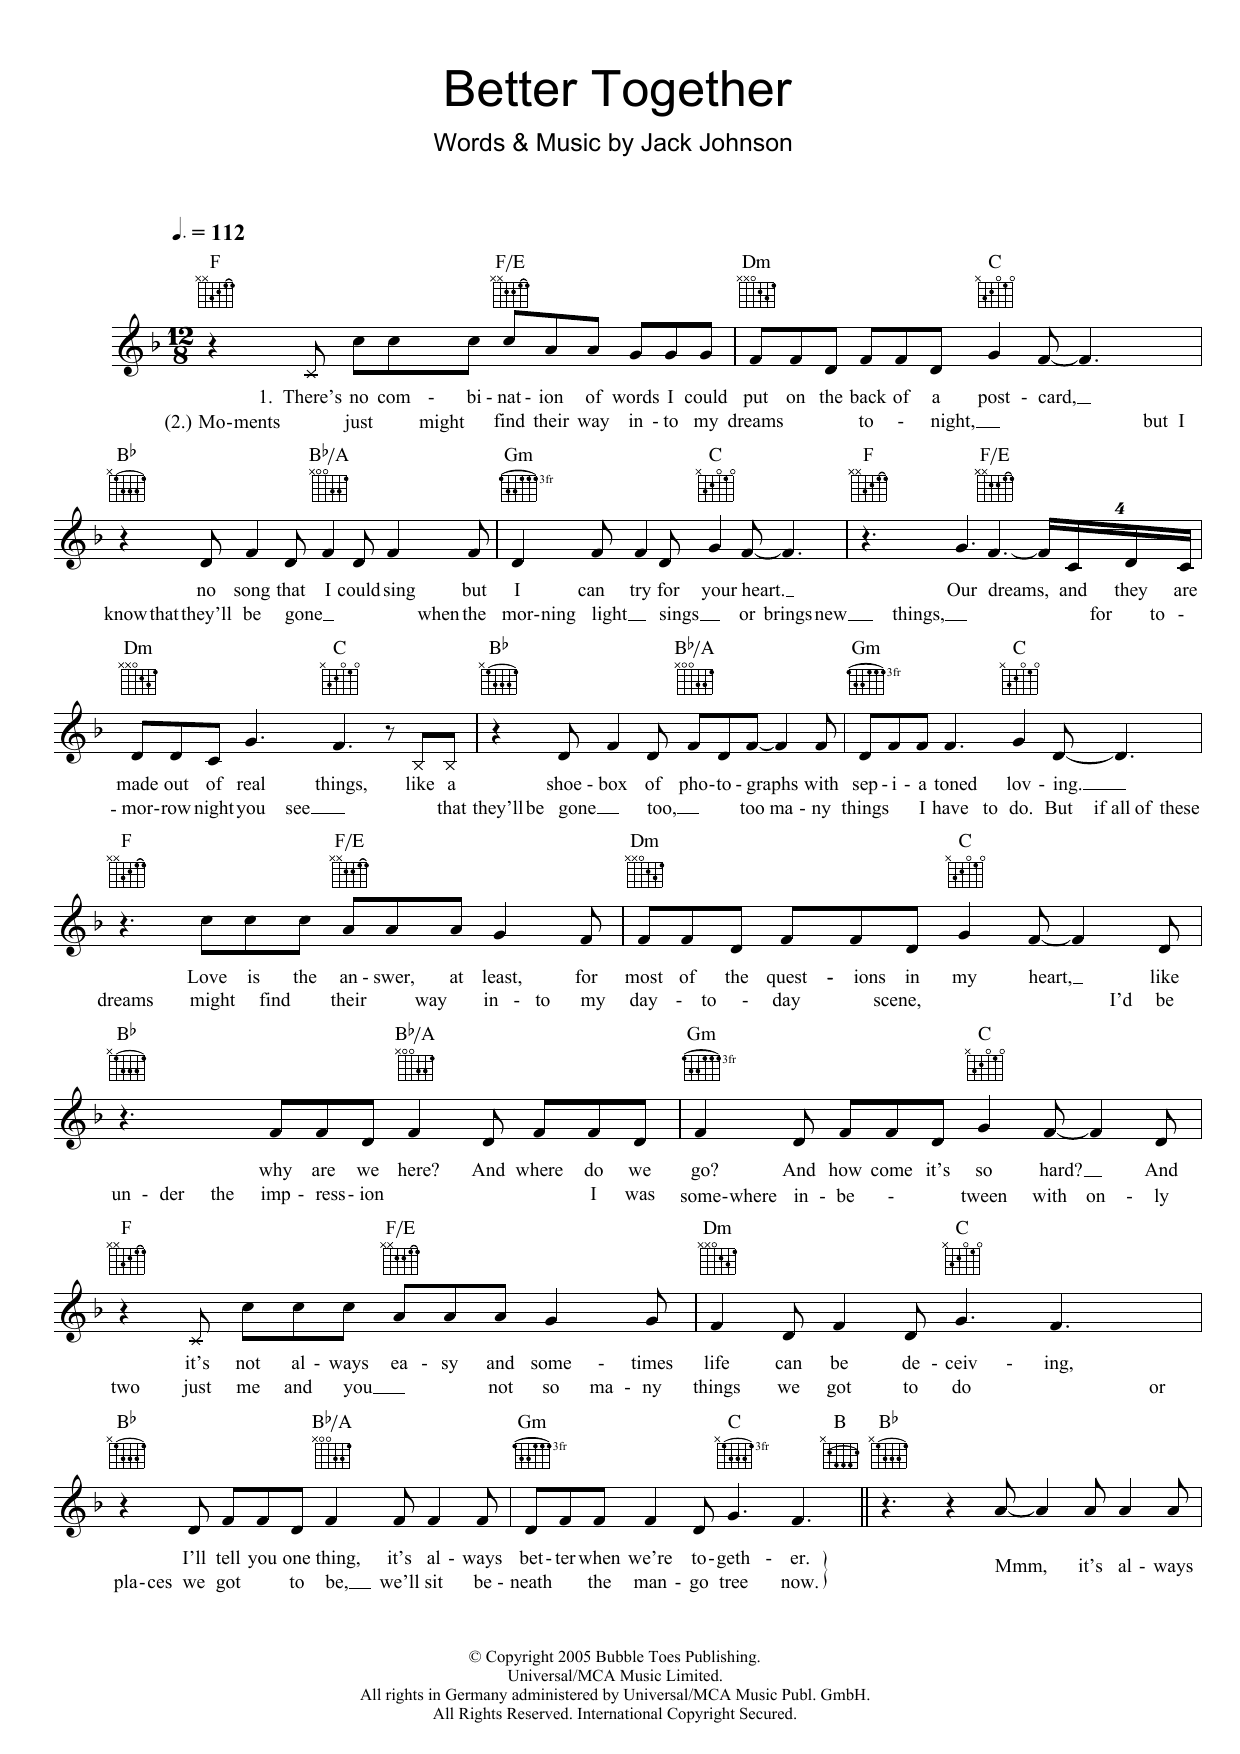 Jack Johnson Better Together Sheet Music Notes & Chords for Guitar Lead Sheet - Download or Print PDF